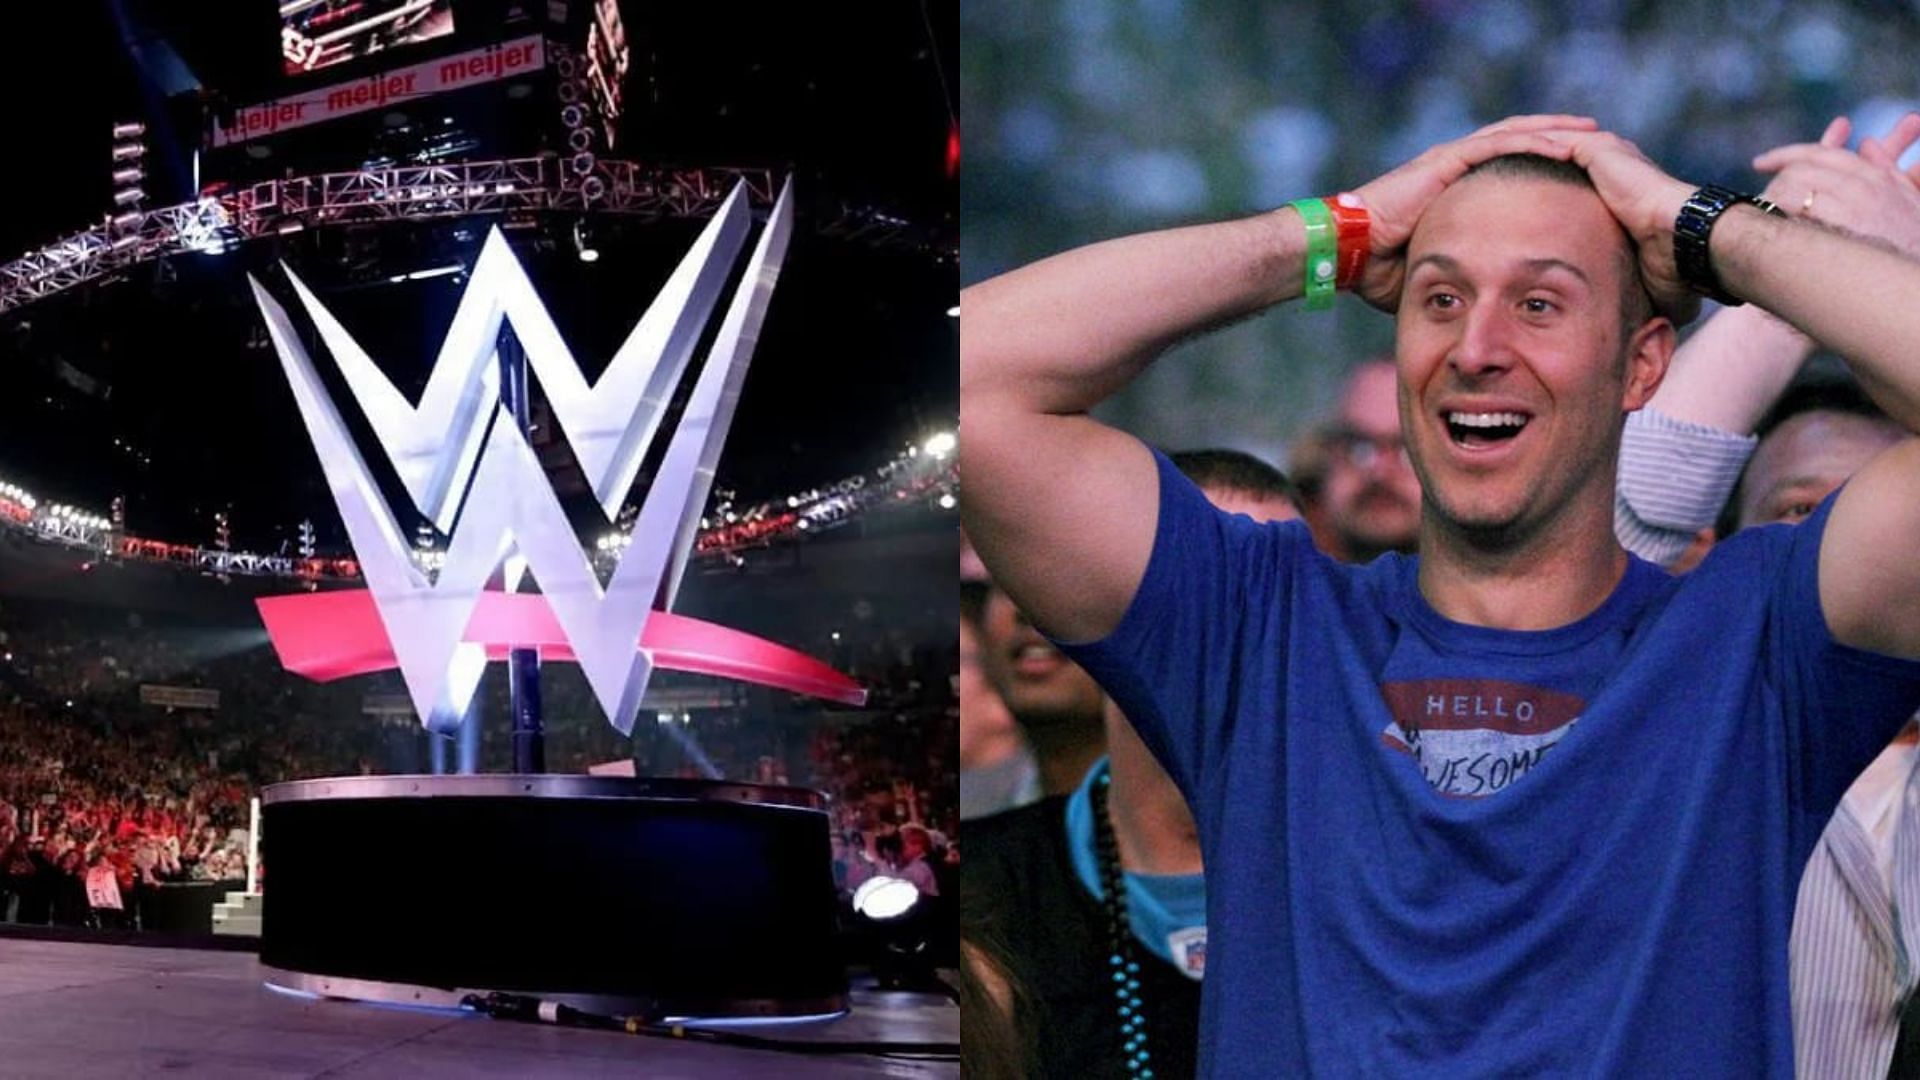 The WWE made a surprising return last week